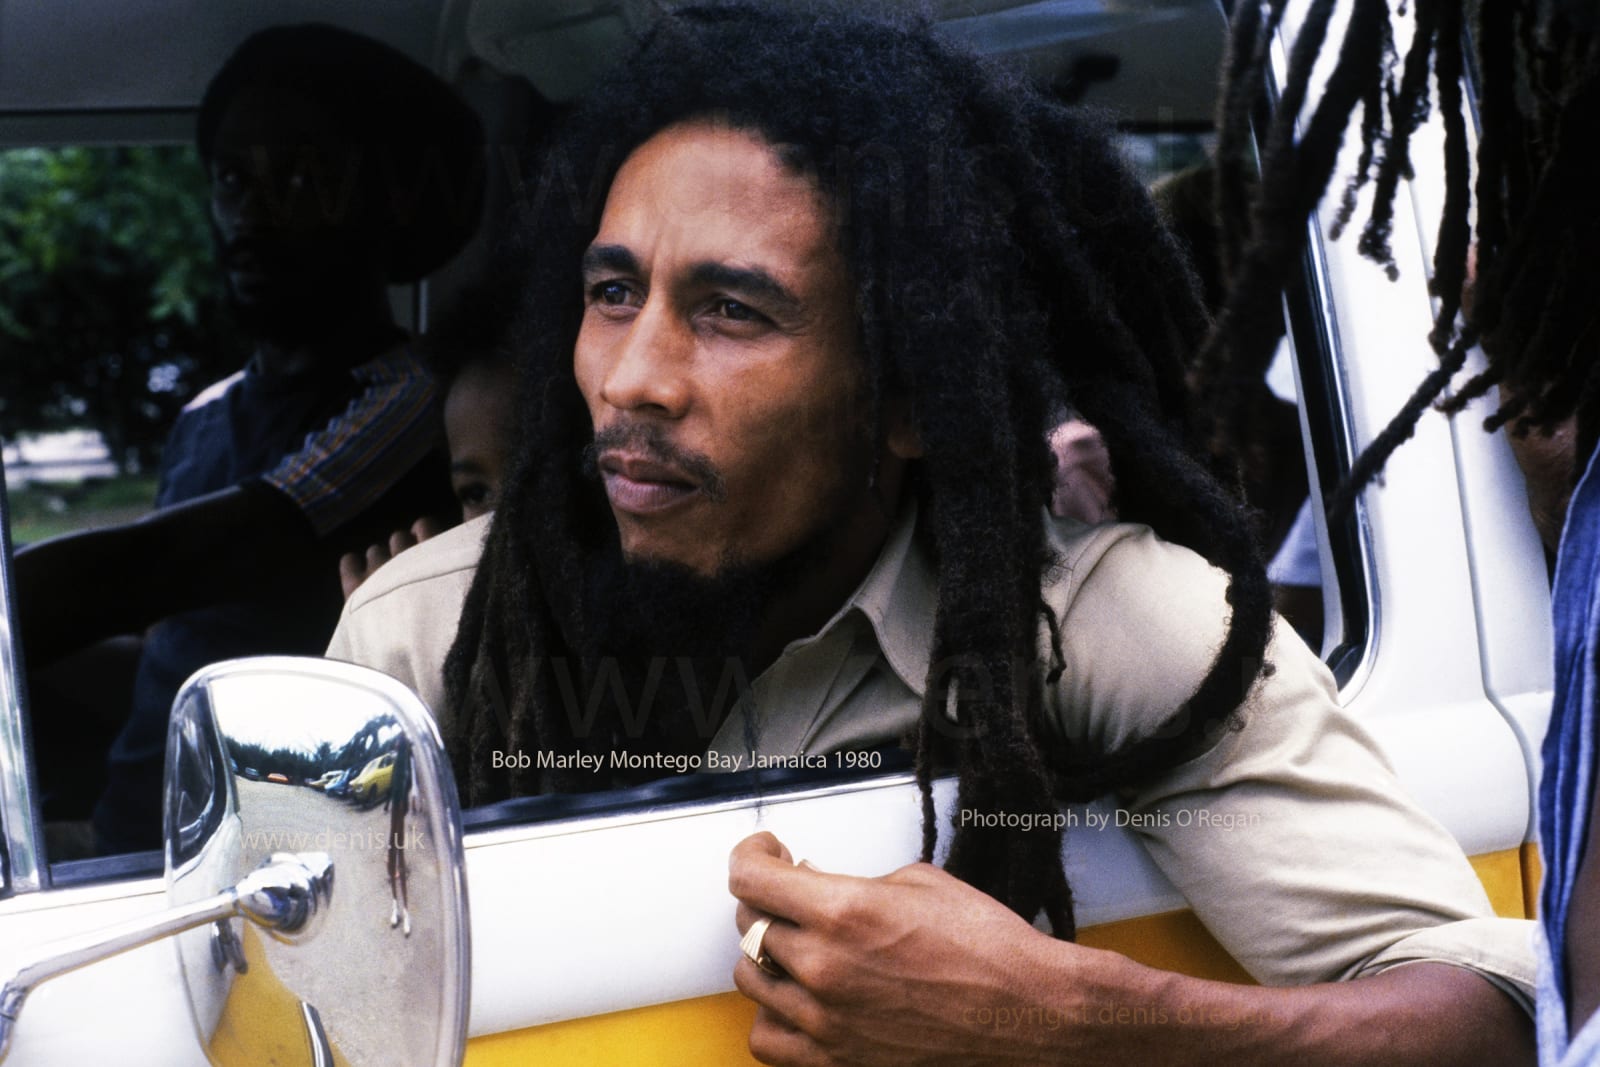 BOB MARLEY, Bob Marley Montego Bay, 1979